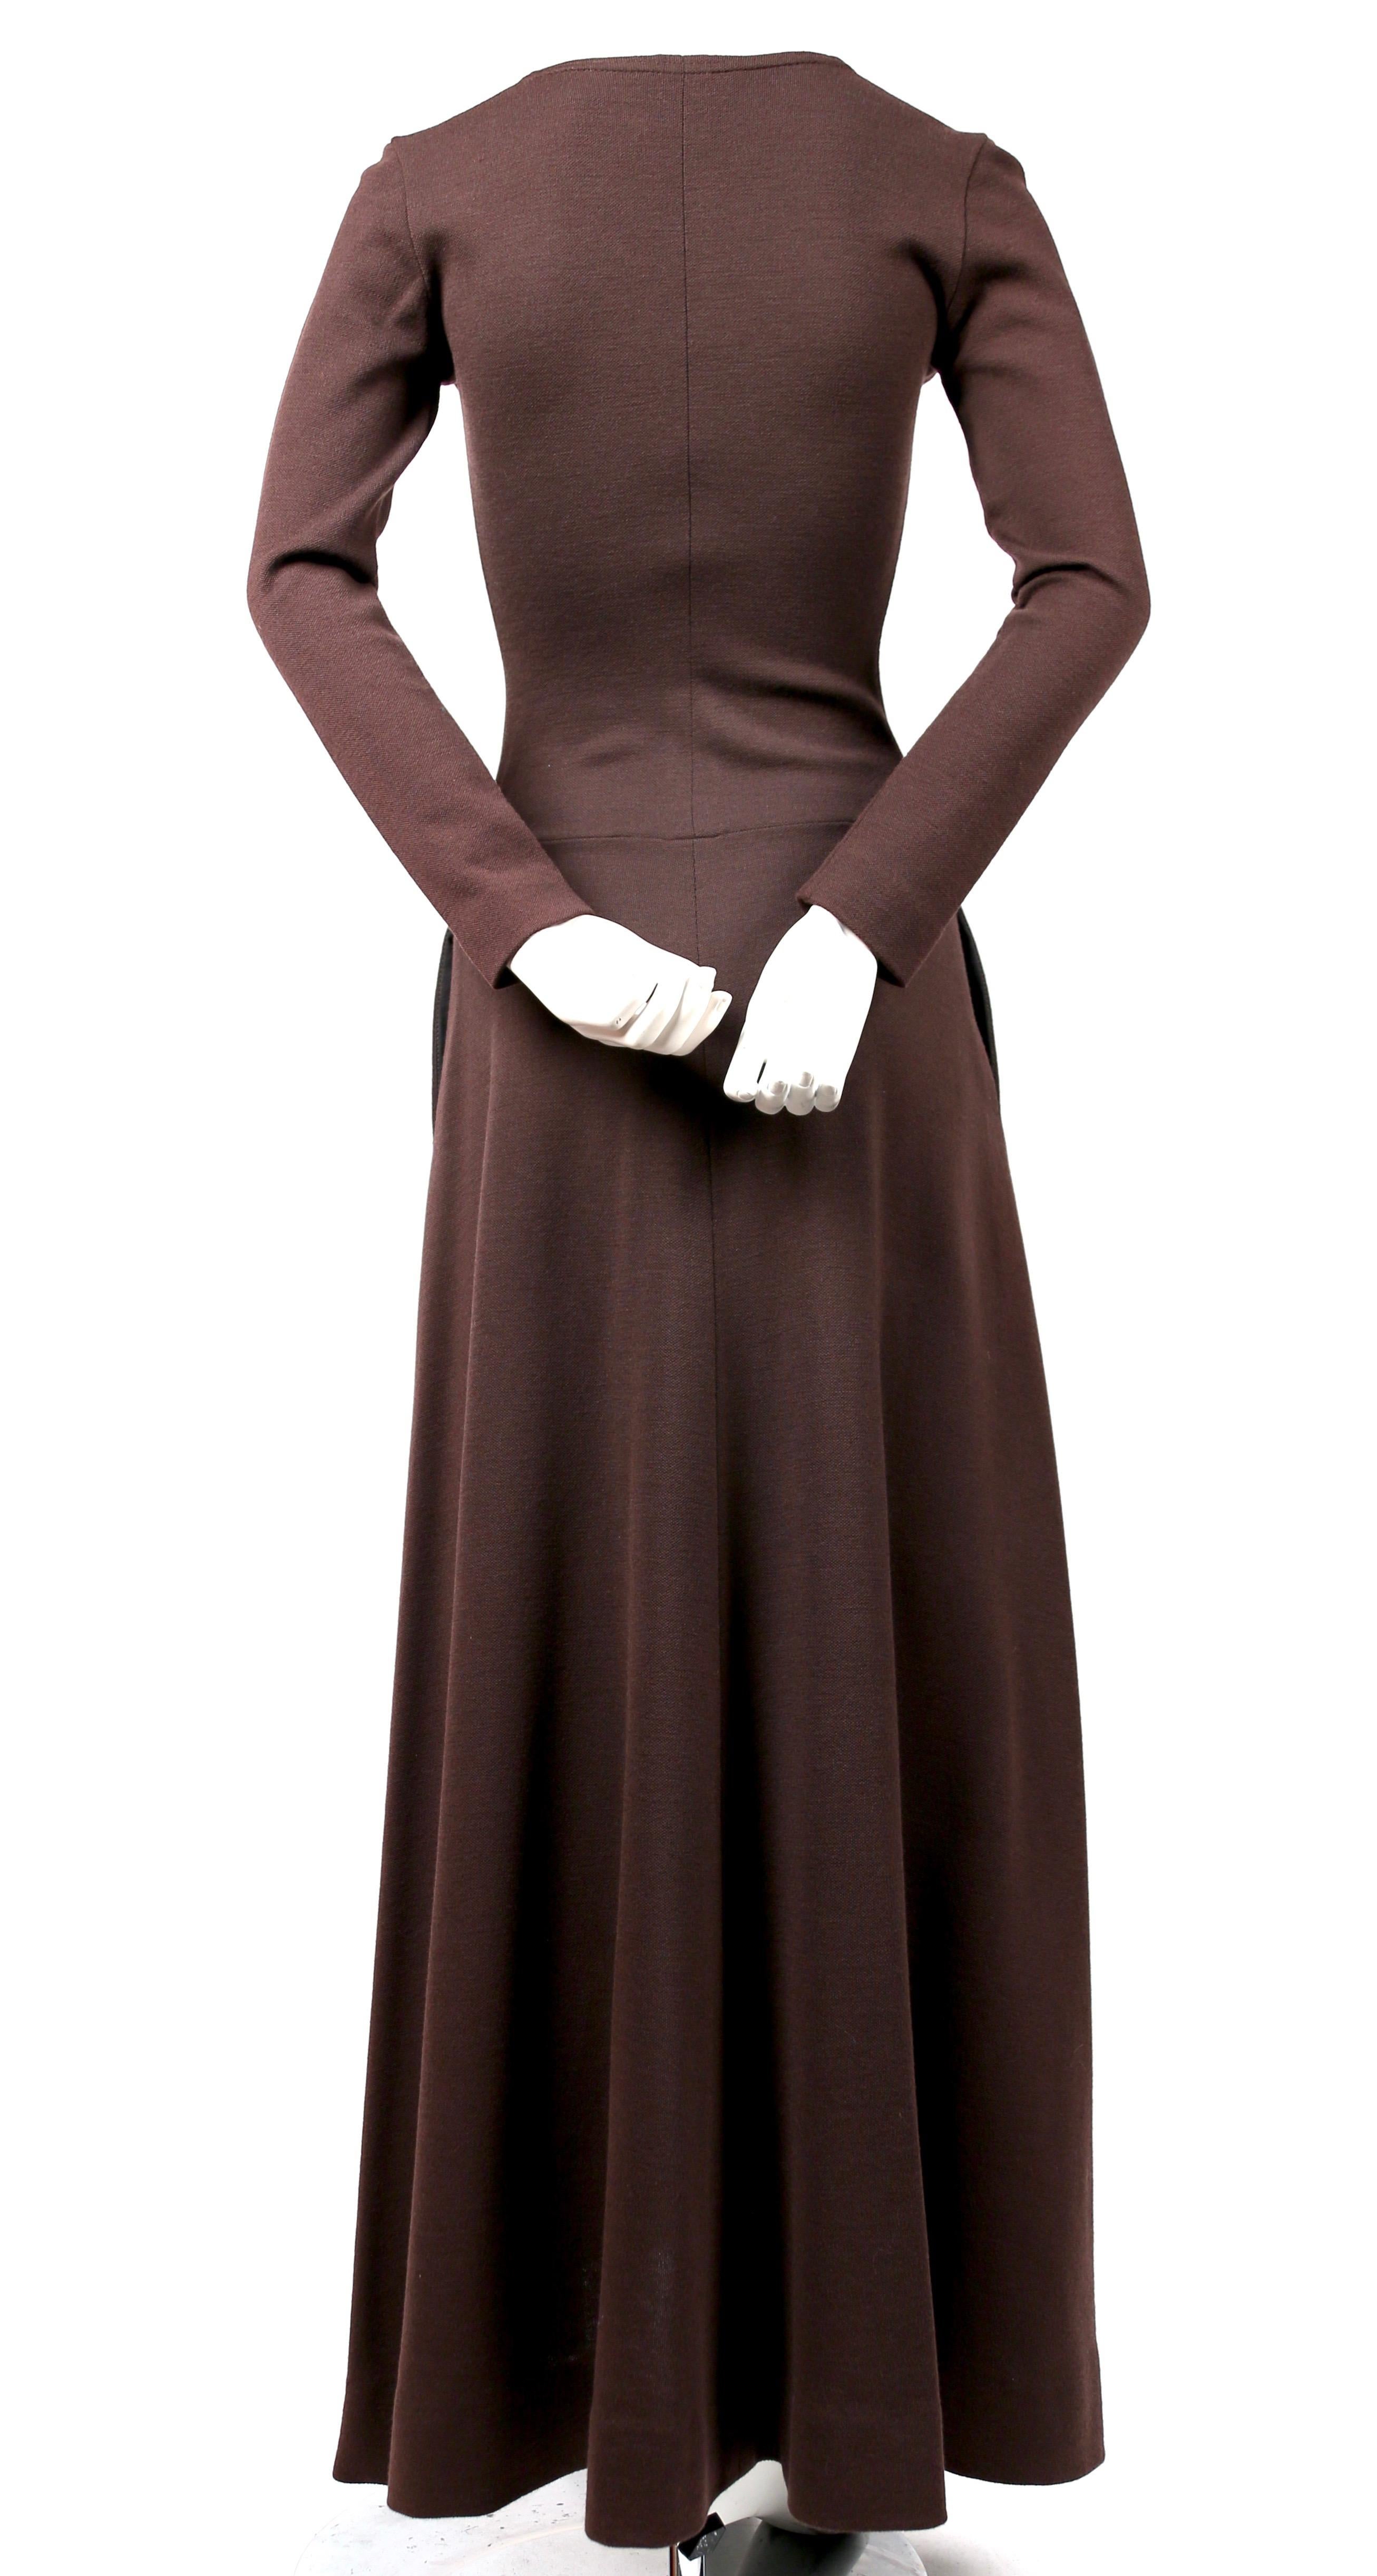 1960's RUDI GERNREICH dress with plunging neckline For Sale 1